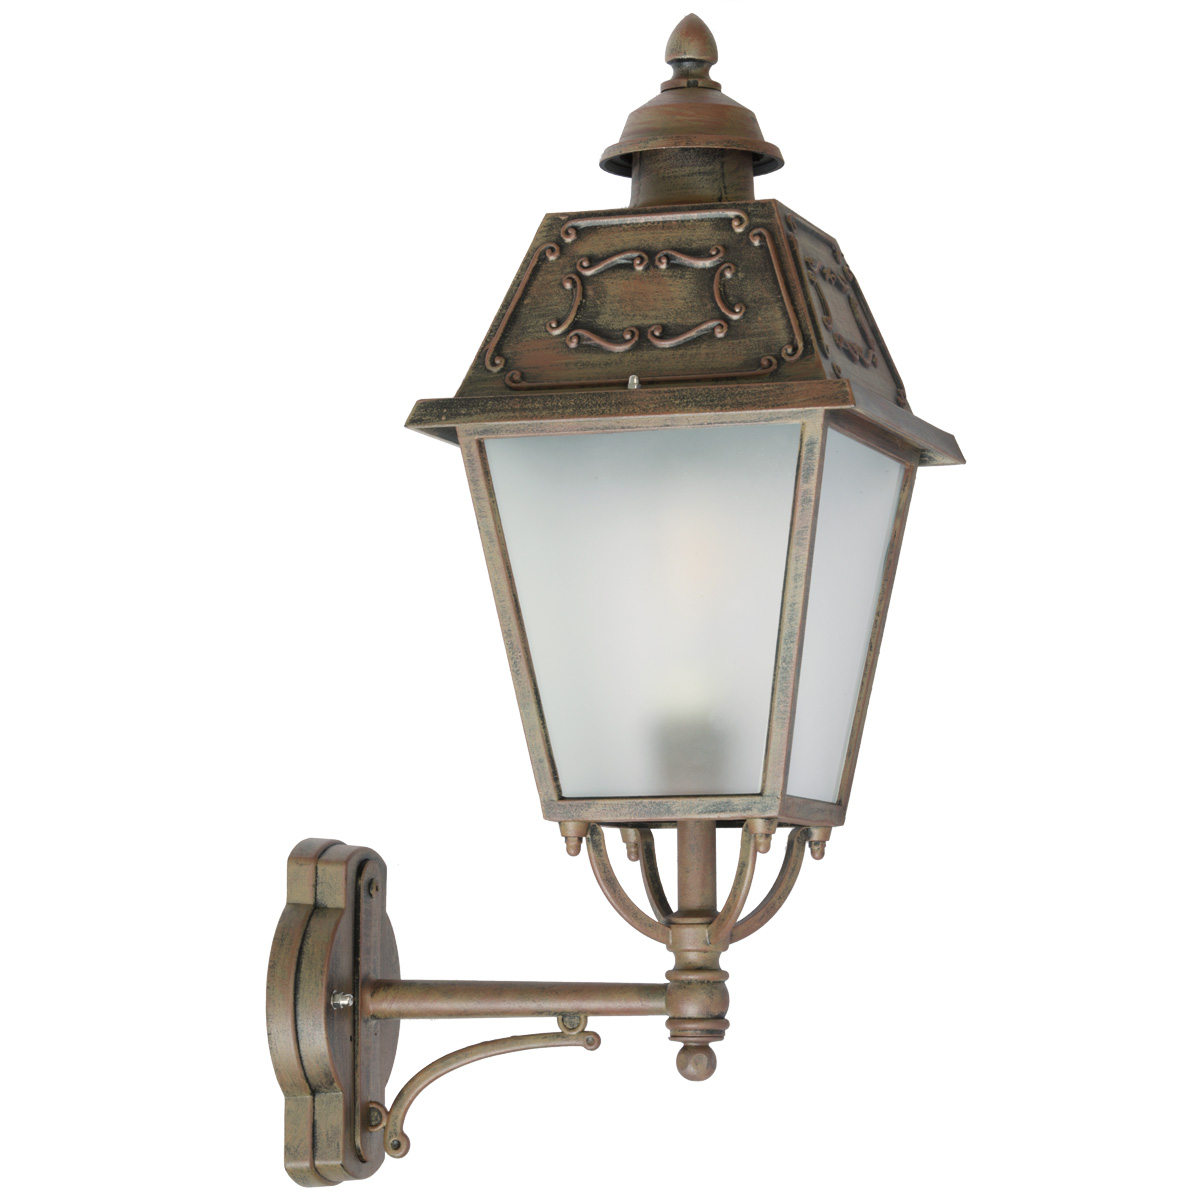 Art Nouveau Wall Lamp with Short Arm